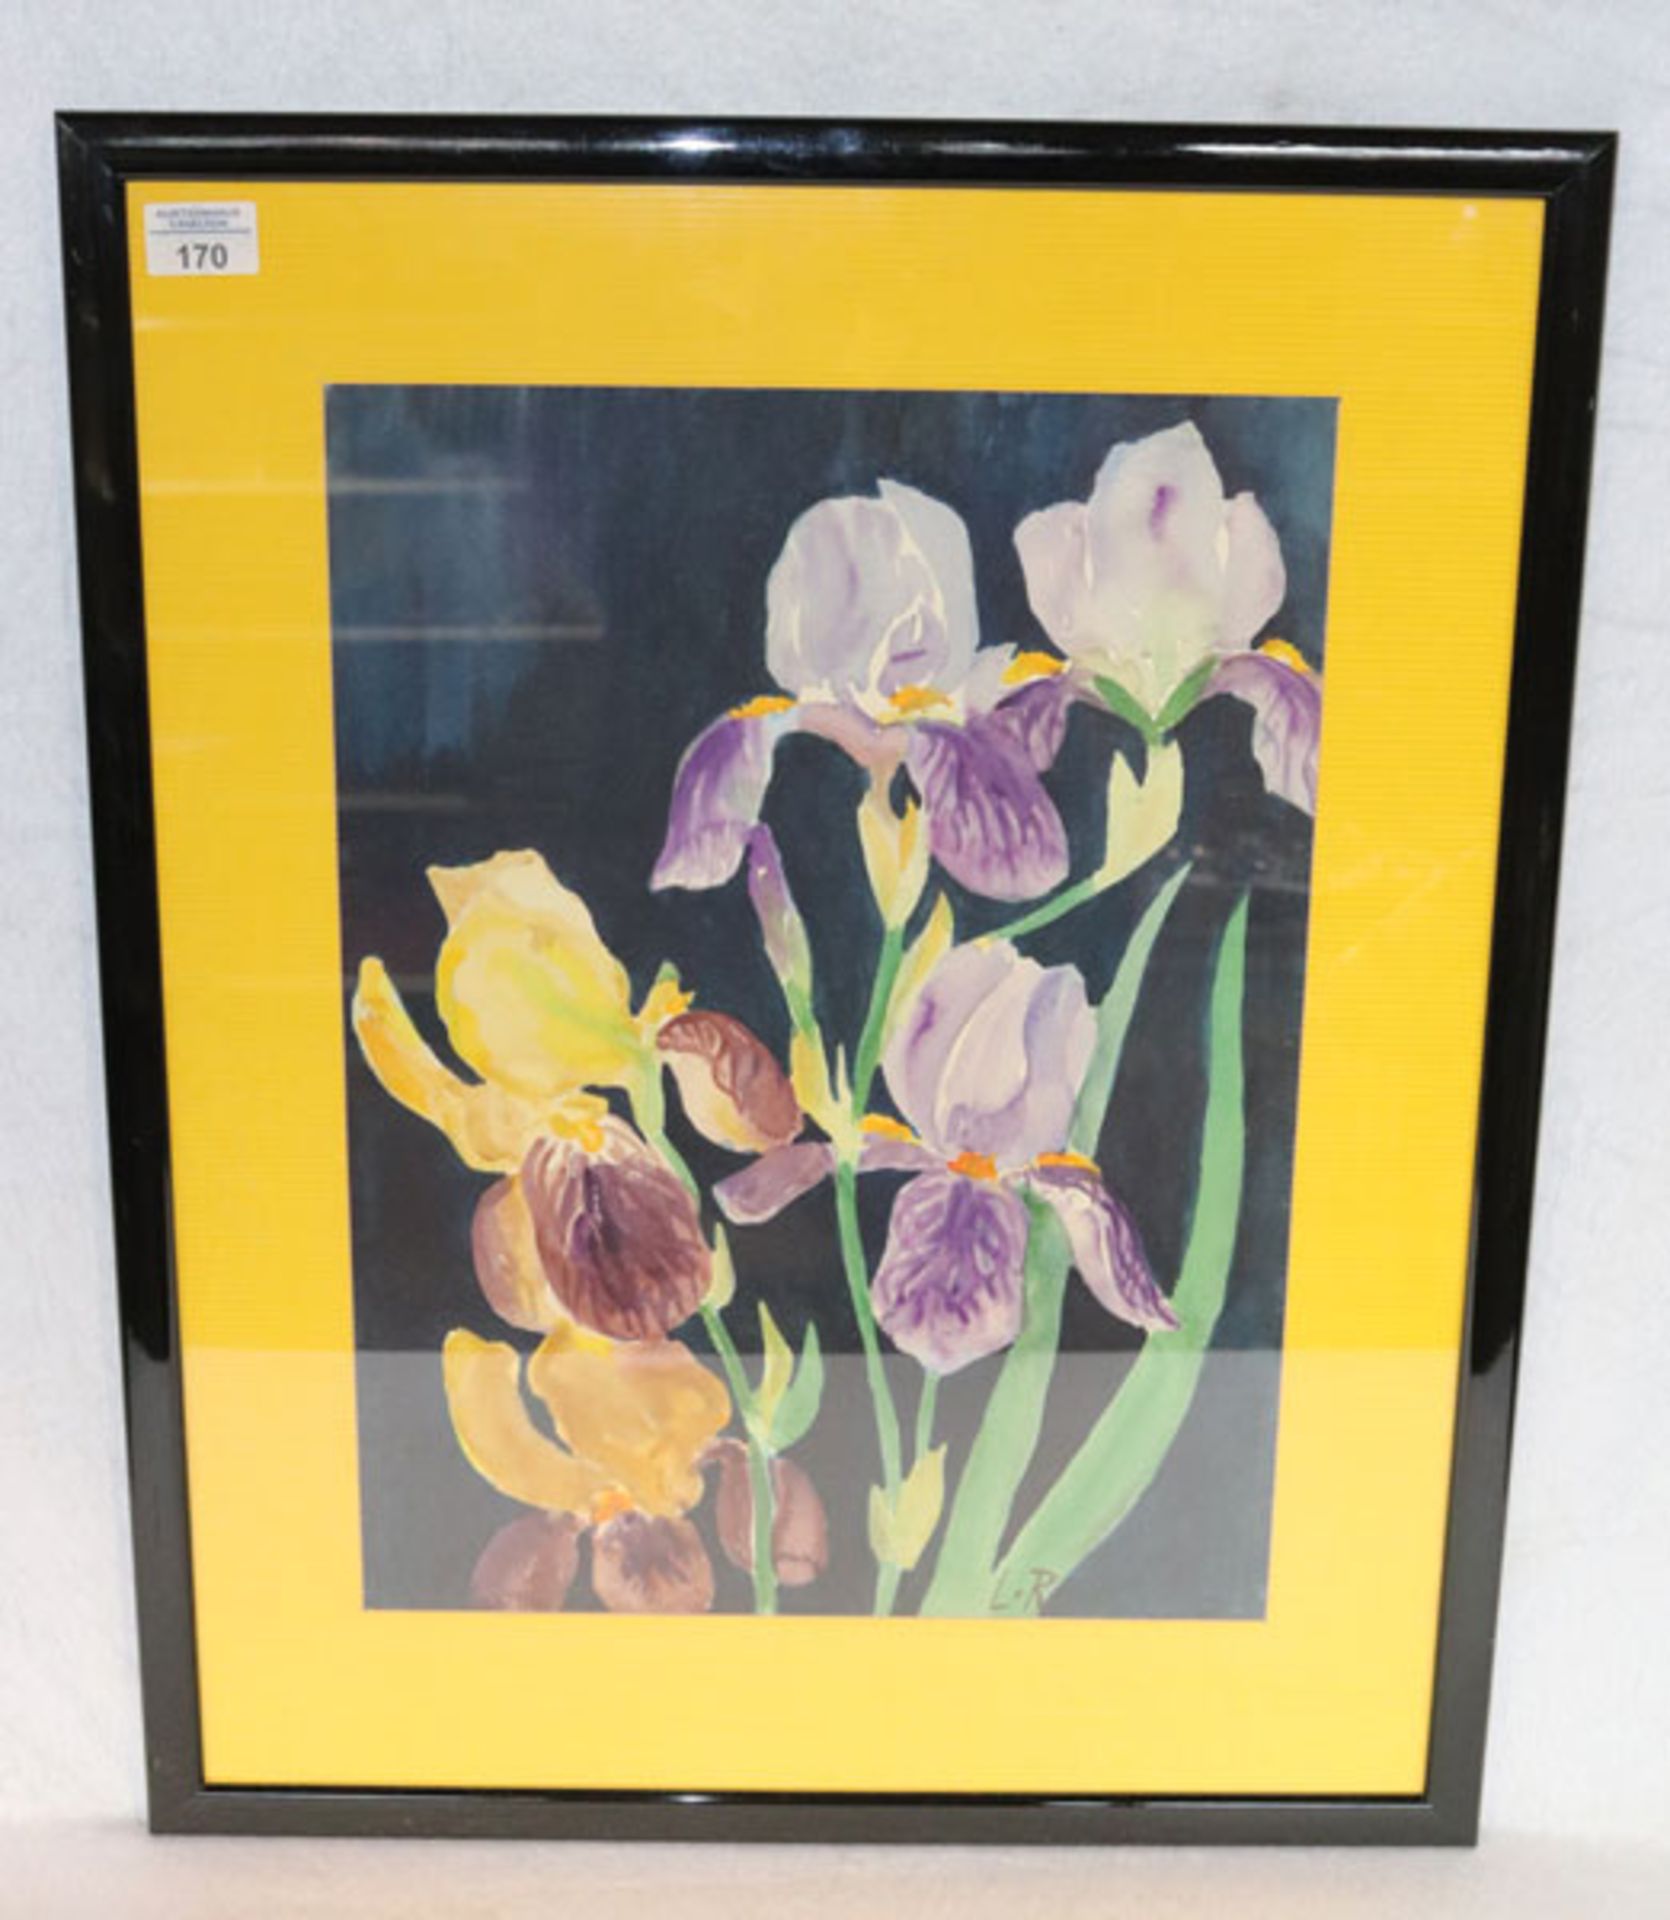 Aquarell 'Iris', monogrammiert L. R., unter Glas gerahmt, Rahmen bestossen, incl. Rahmen 65 cm x